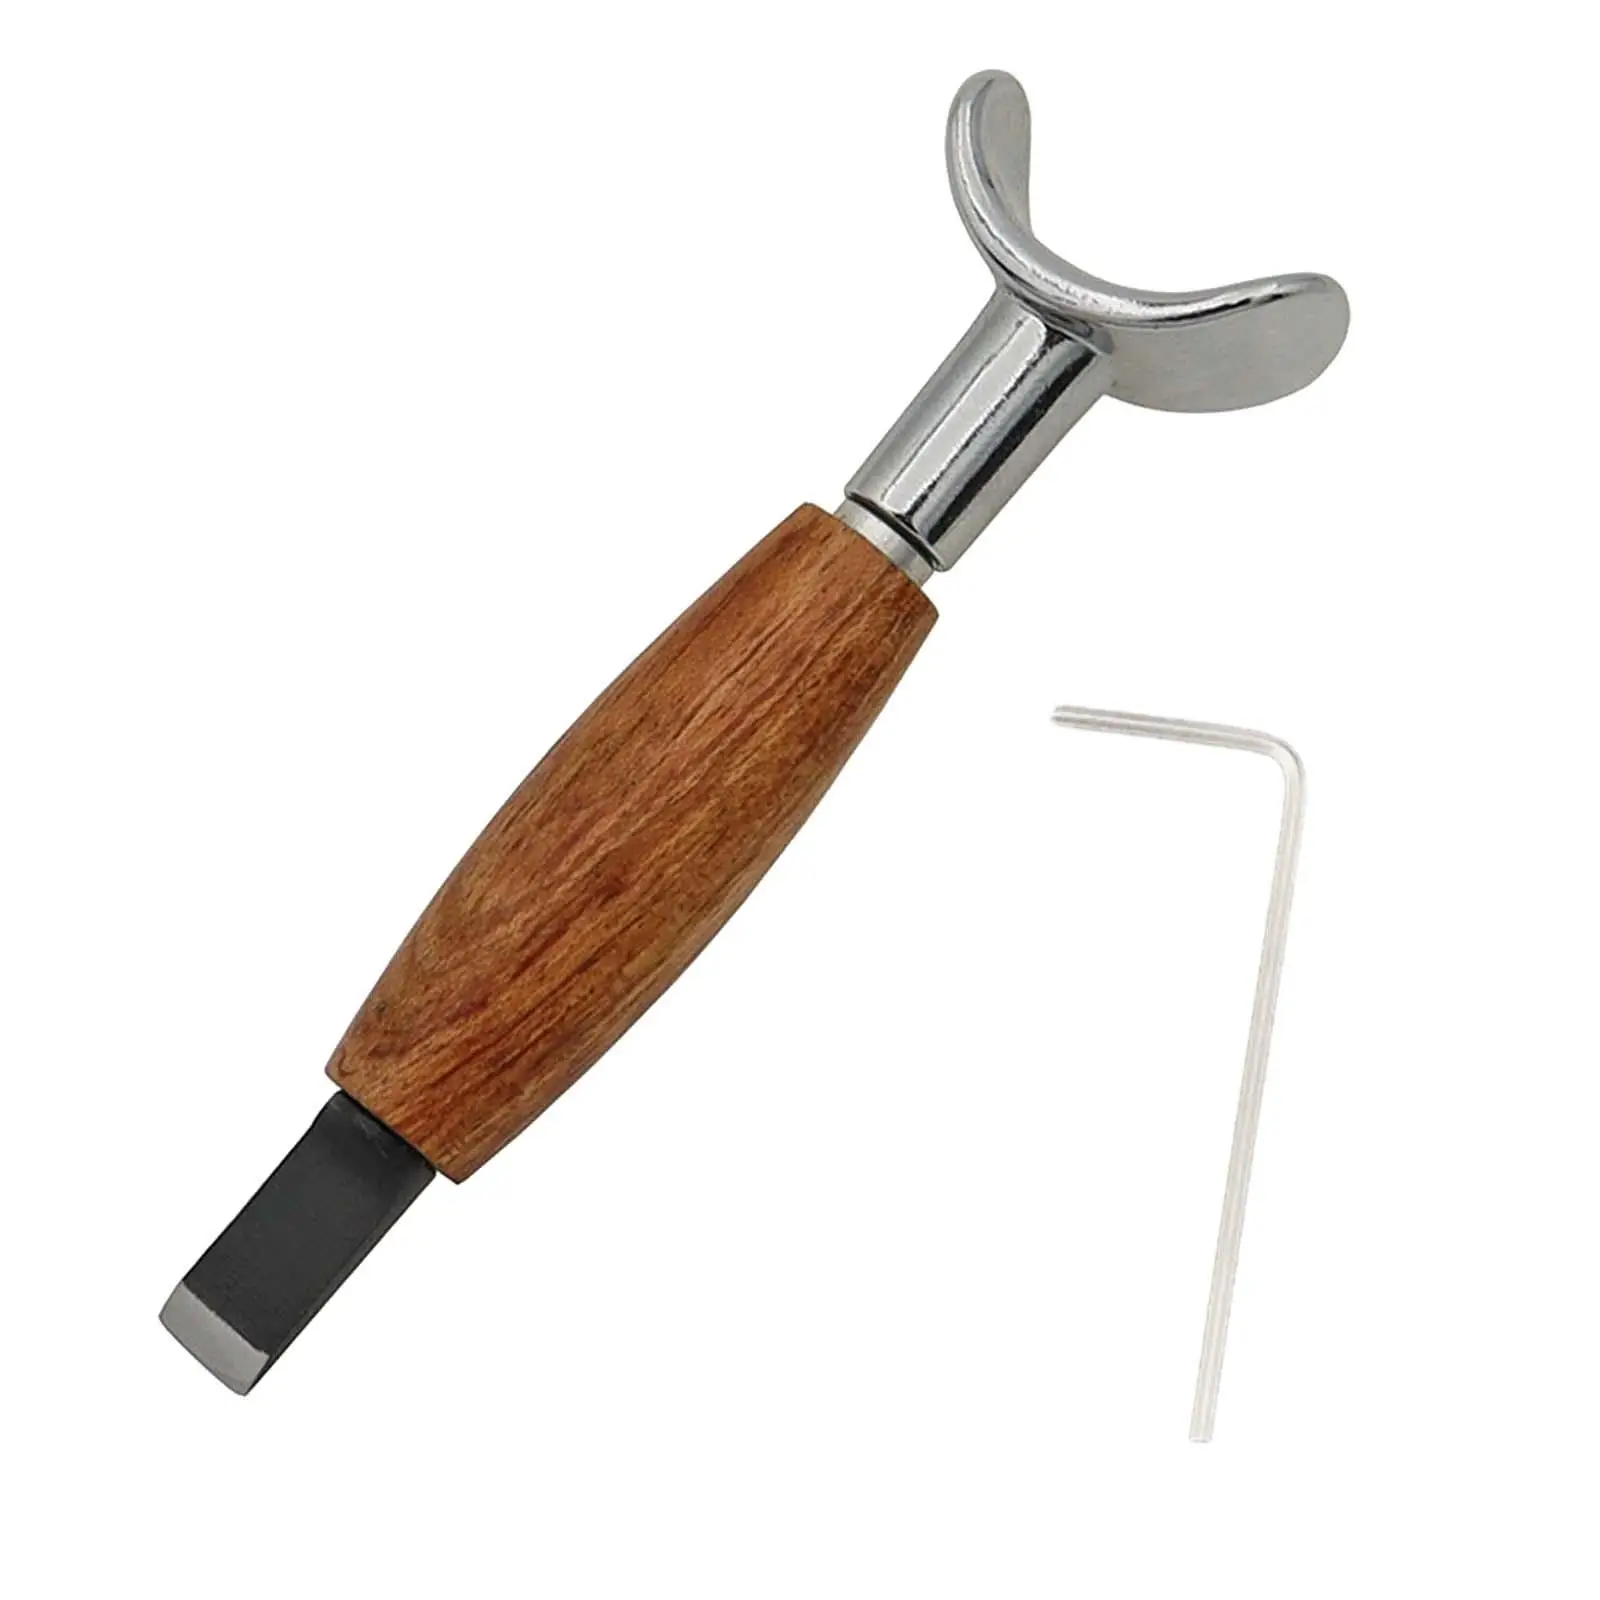 Swivel Knife Stainless Steel DIY Art Crafts Professional Manual Nicking Tool